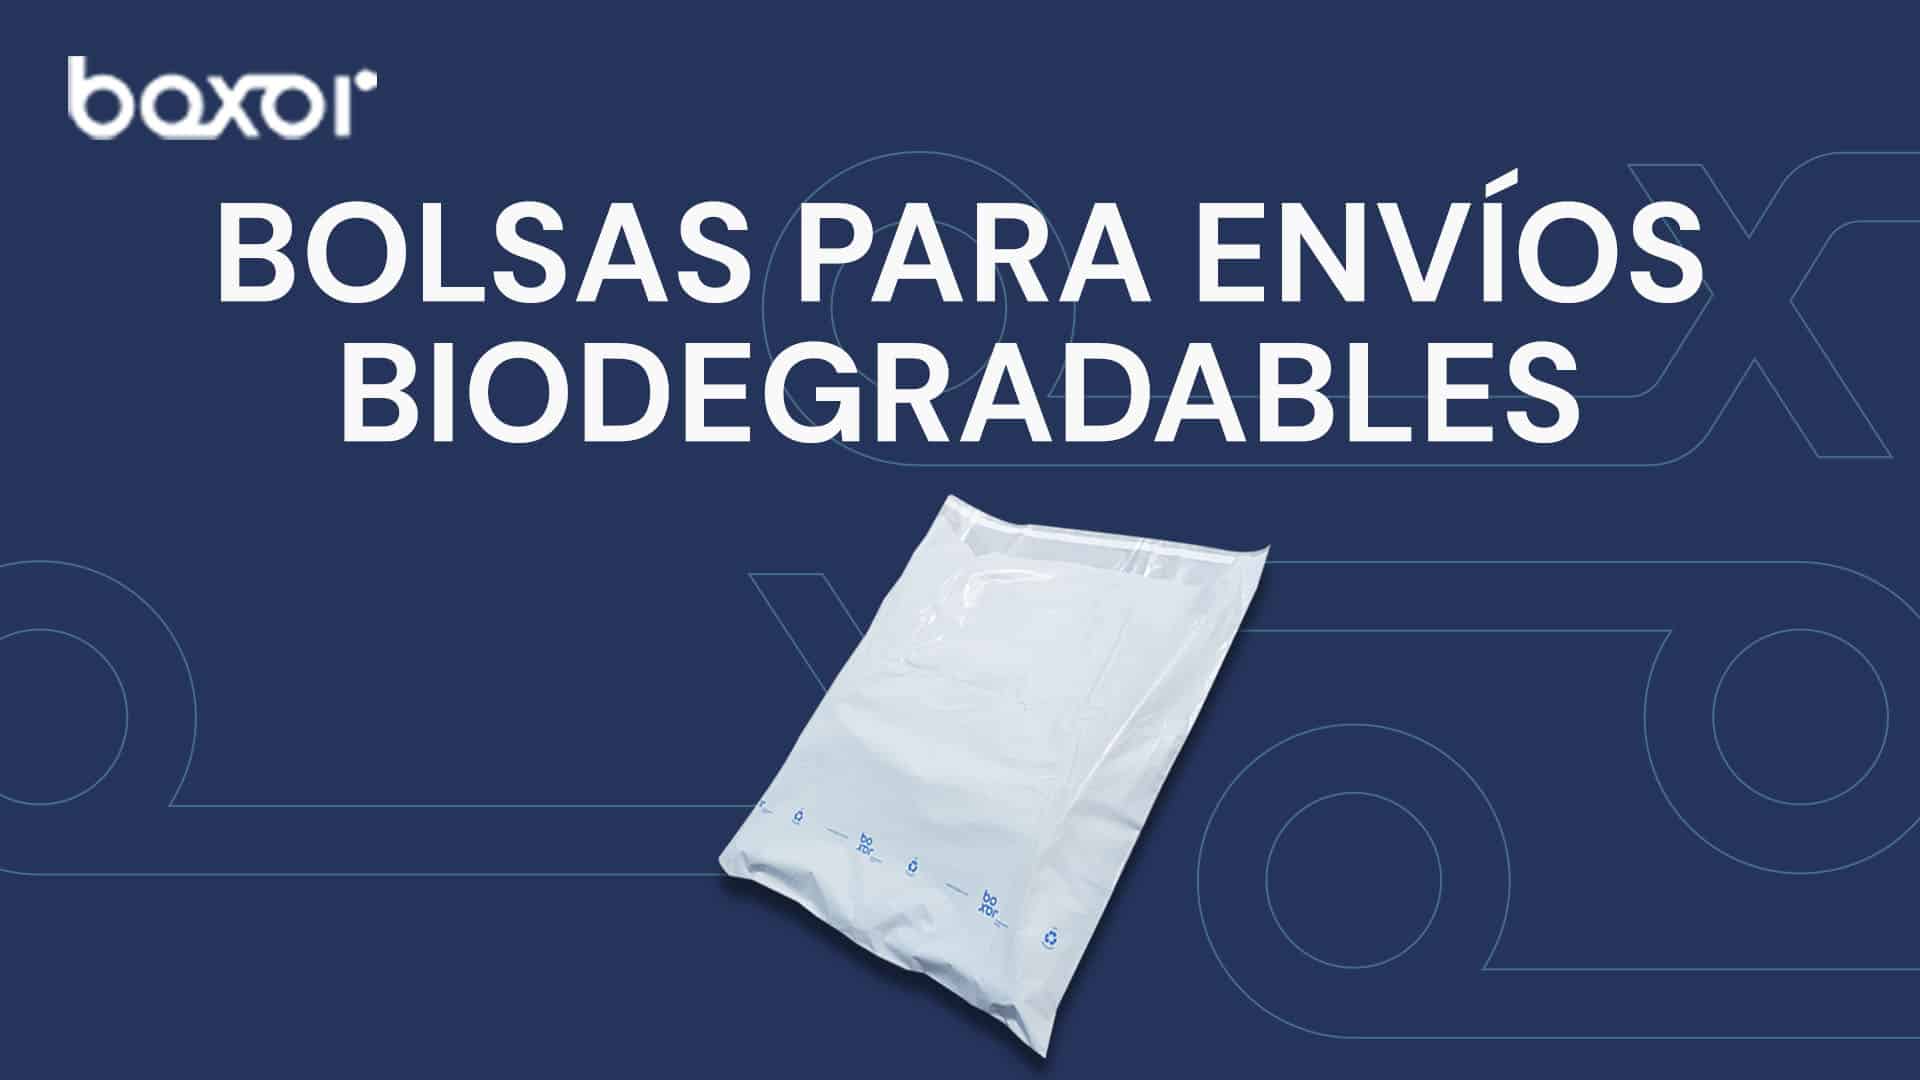 Bolsas para envíos biodegradables - Boxor